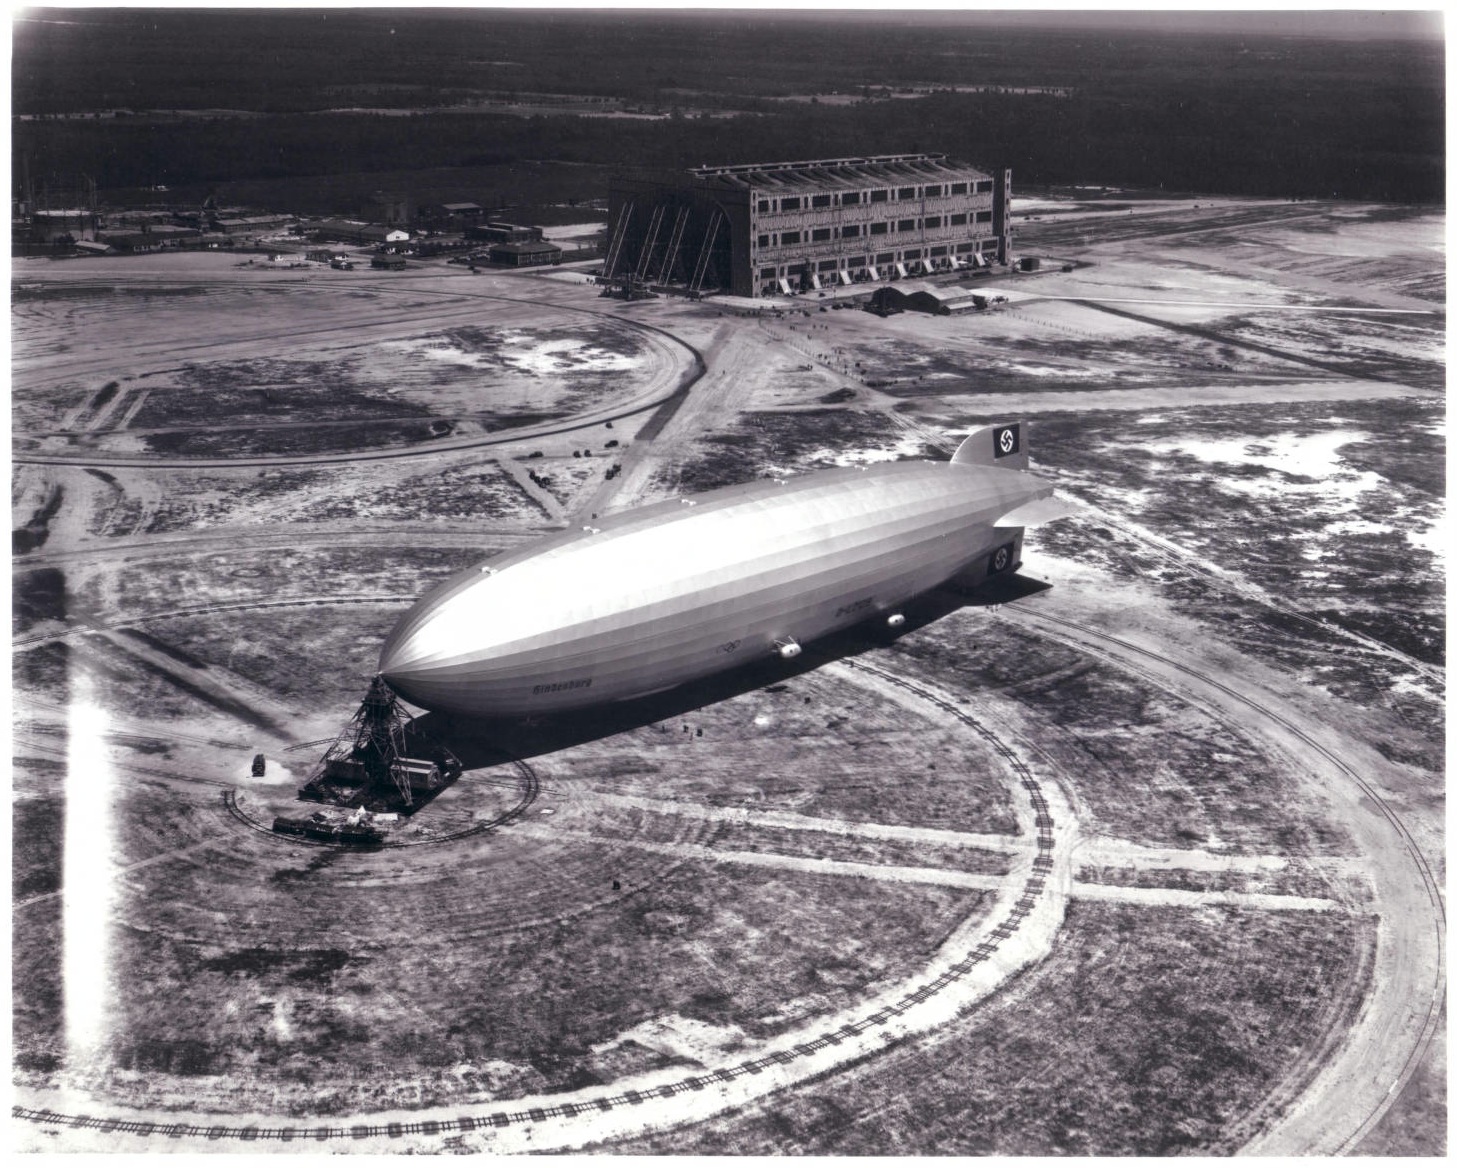 Hindenburg Zeppelin in Lakehurst NJ 1936